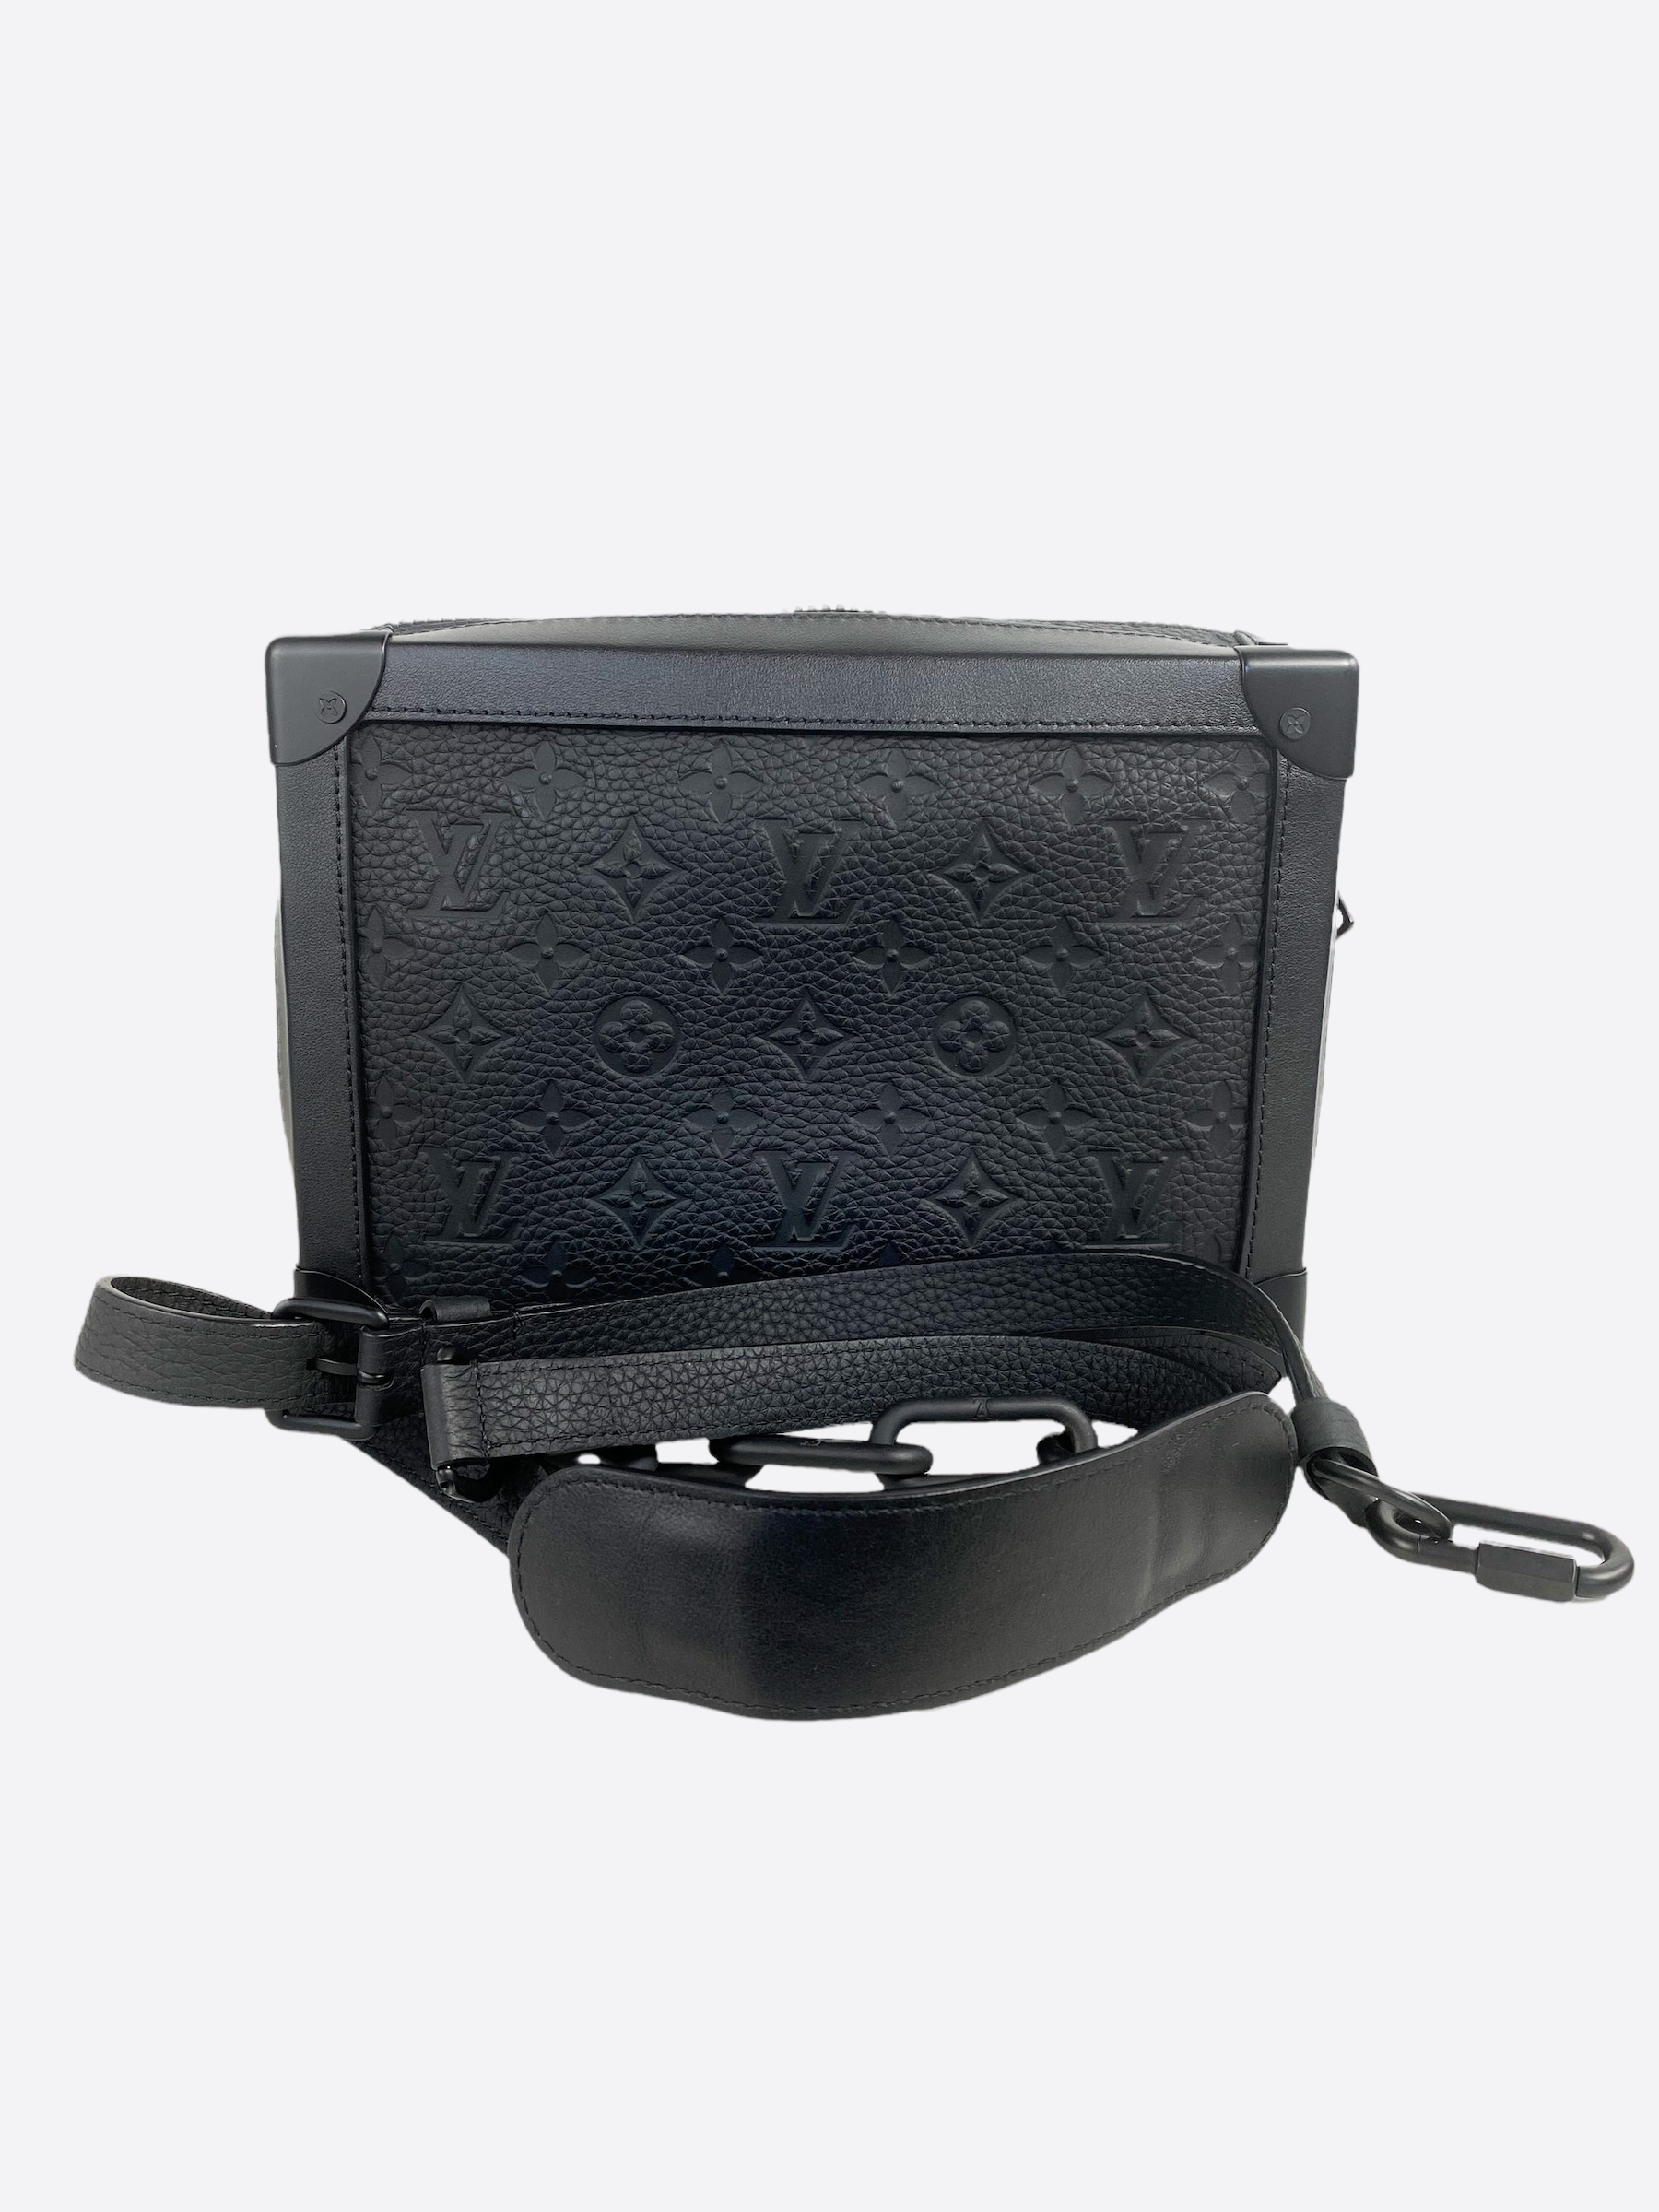 Louis Vuitton Future Trunk, Black, One Size